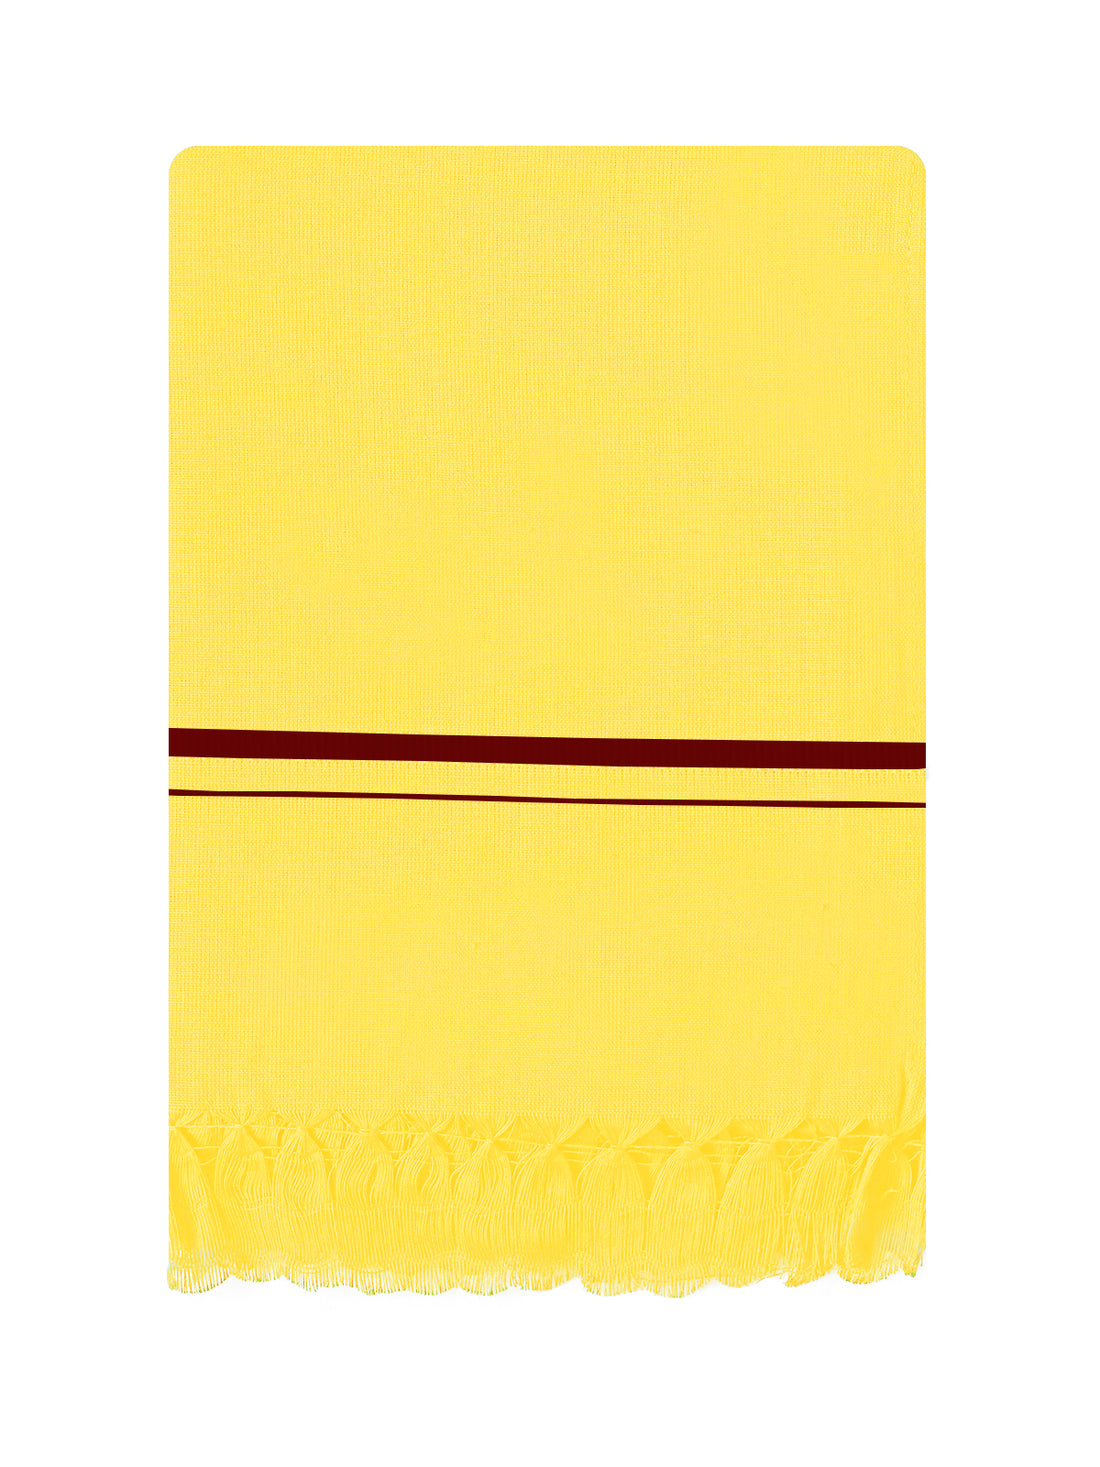 Amman Temple Yellow Towel (85 x 150 cm) - Alaya Cotton